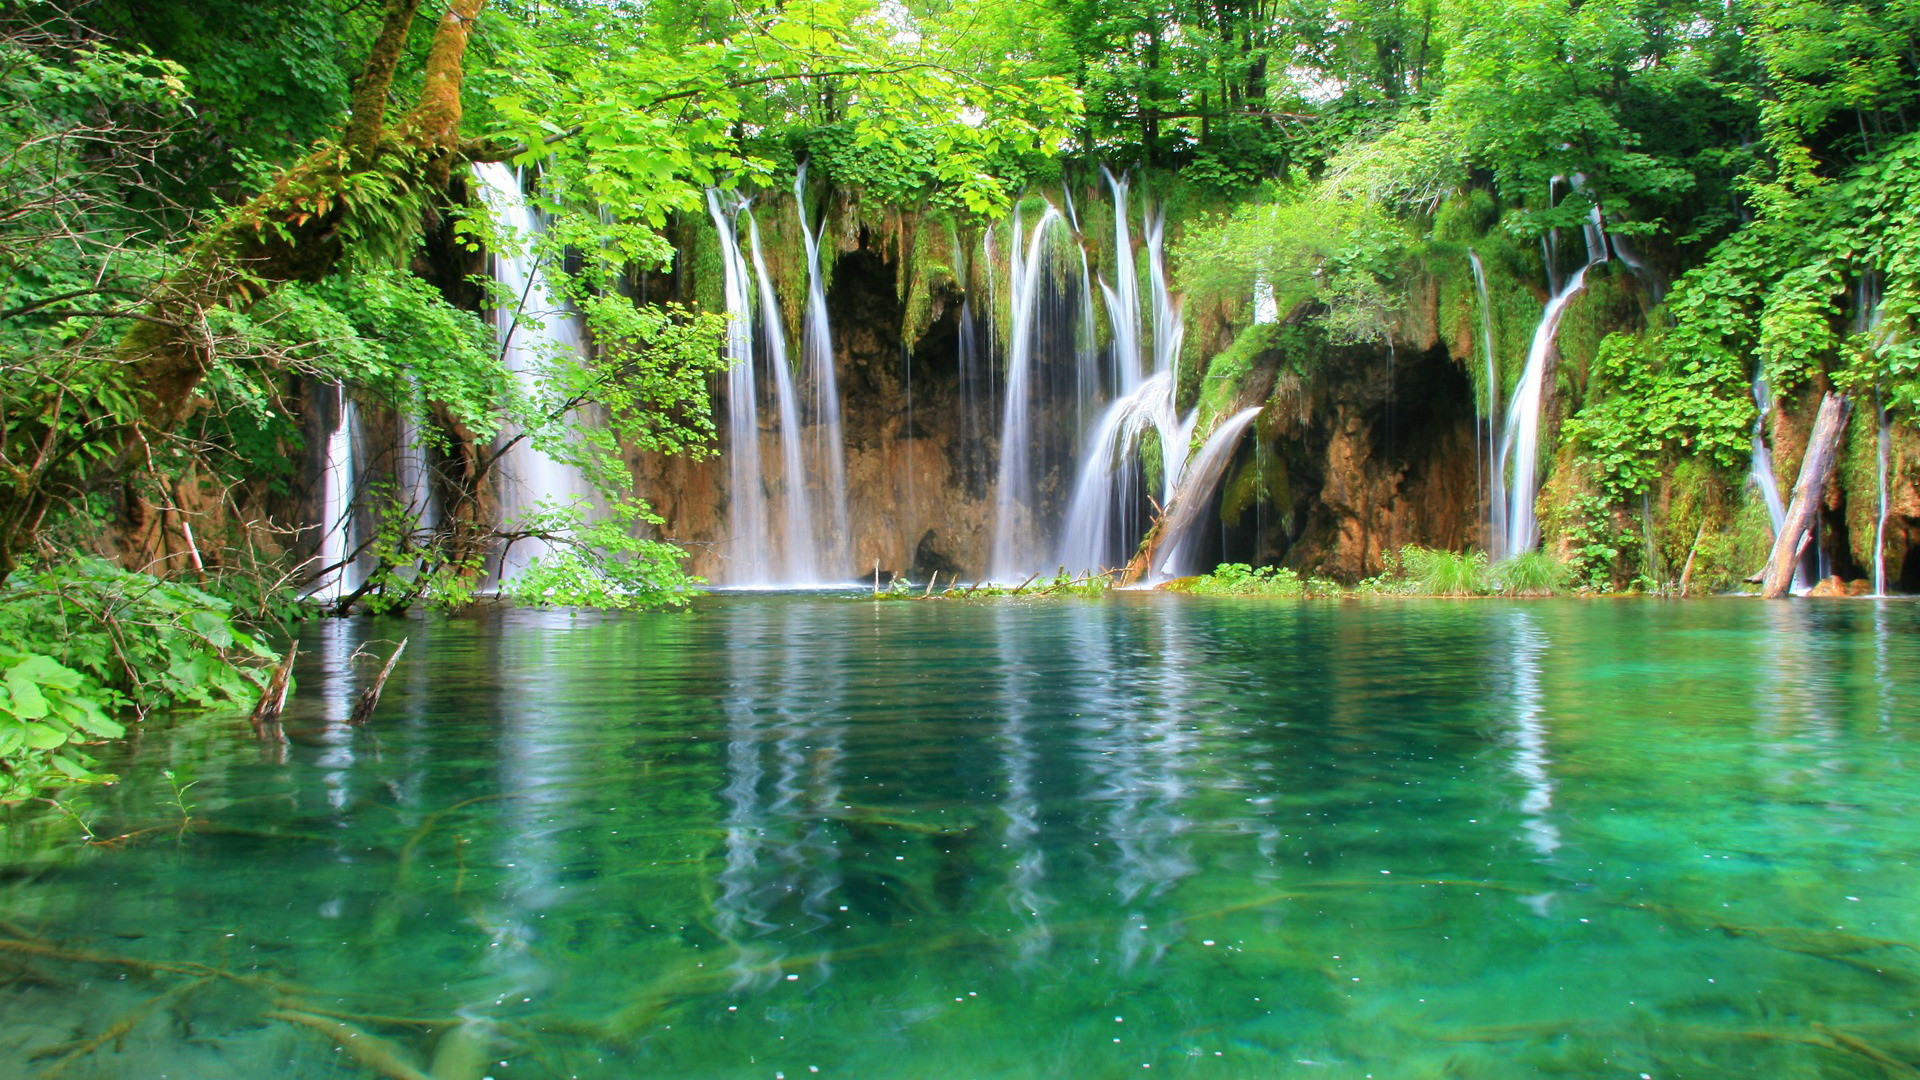 Green nature - beautiful waterfall and mountain lake